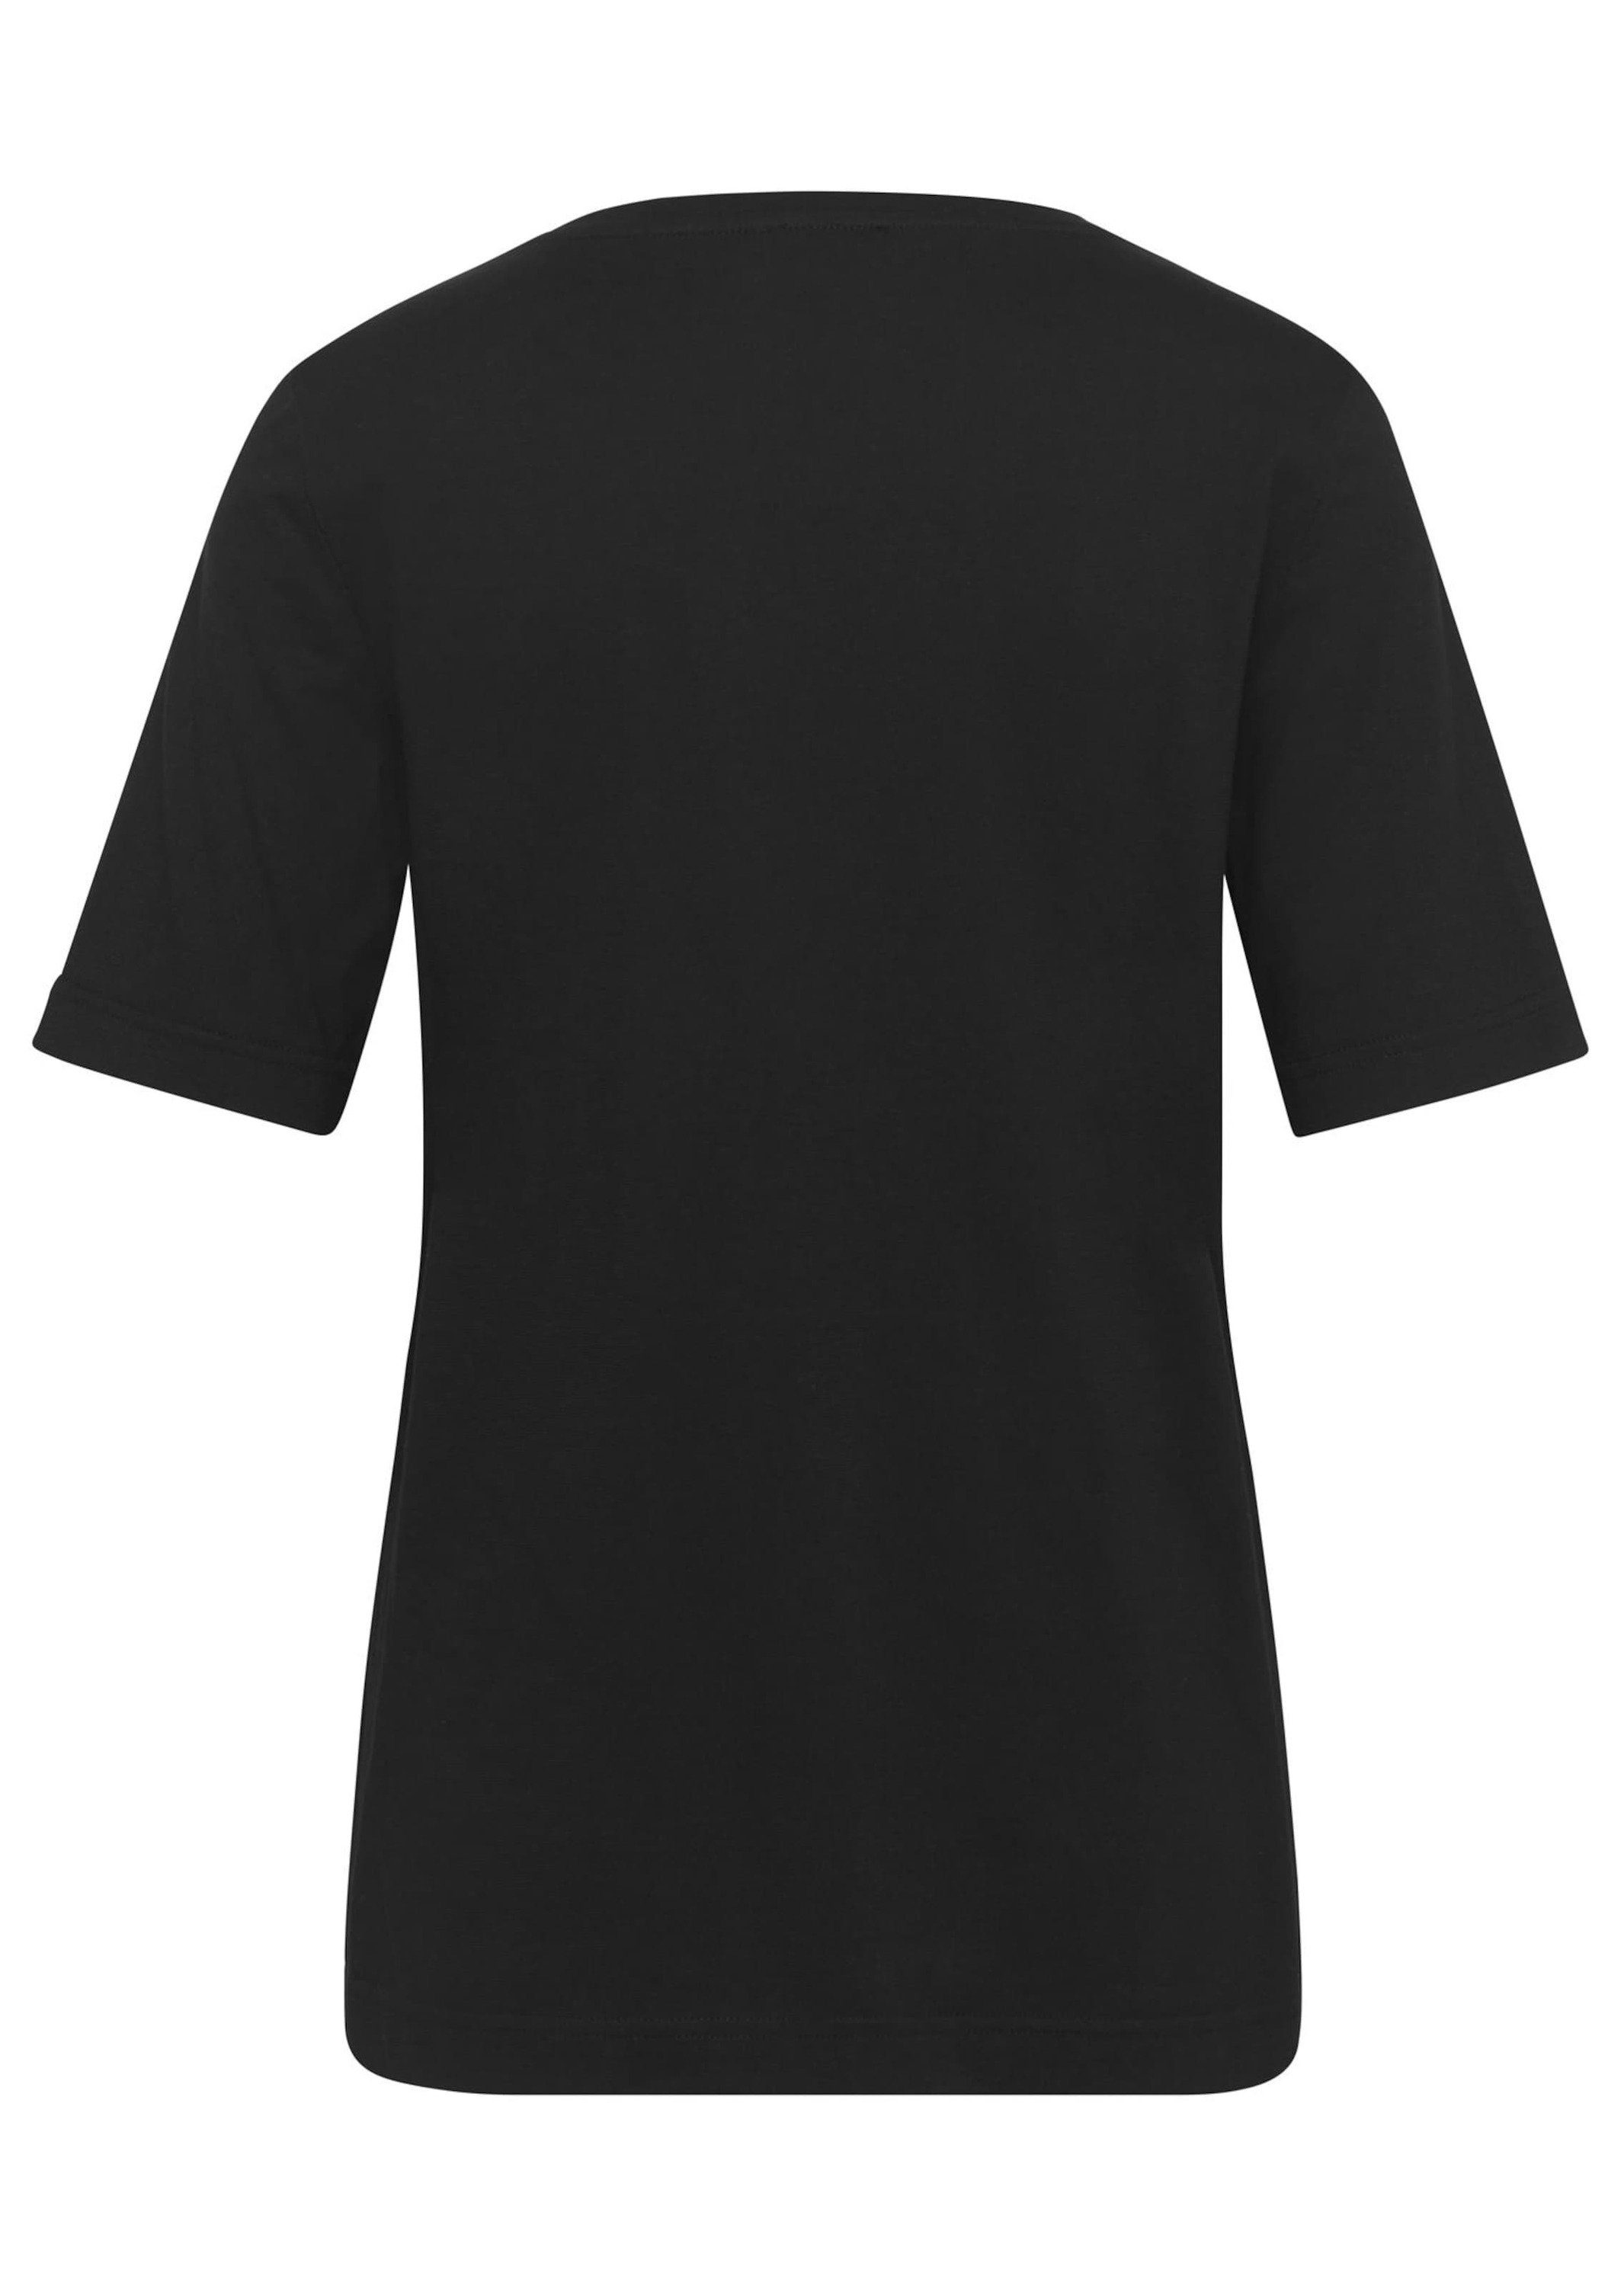 GOLDNER Print-Shirt Kurzgröße: schwarz